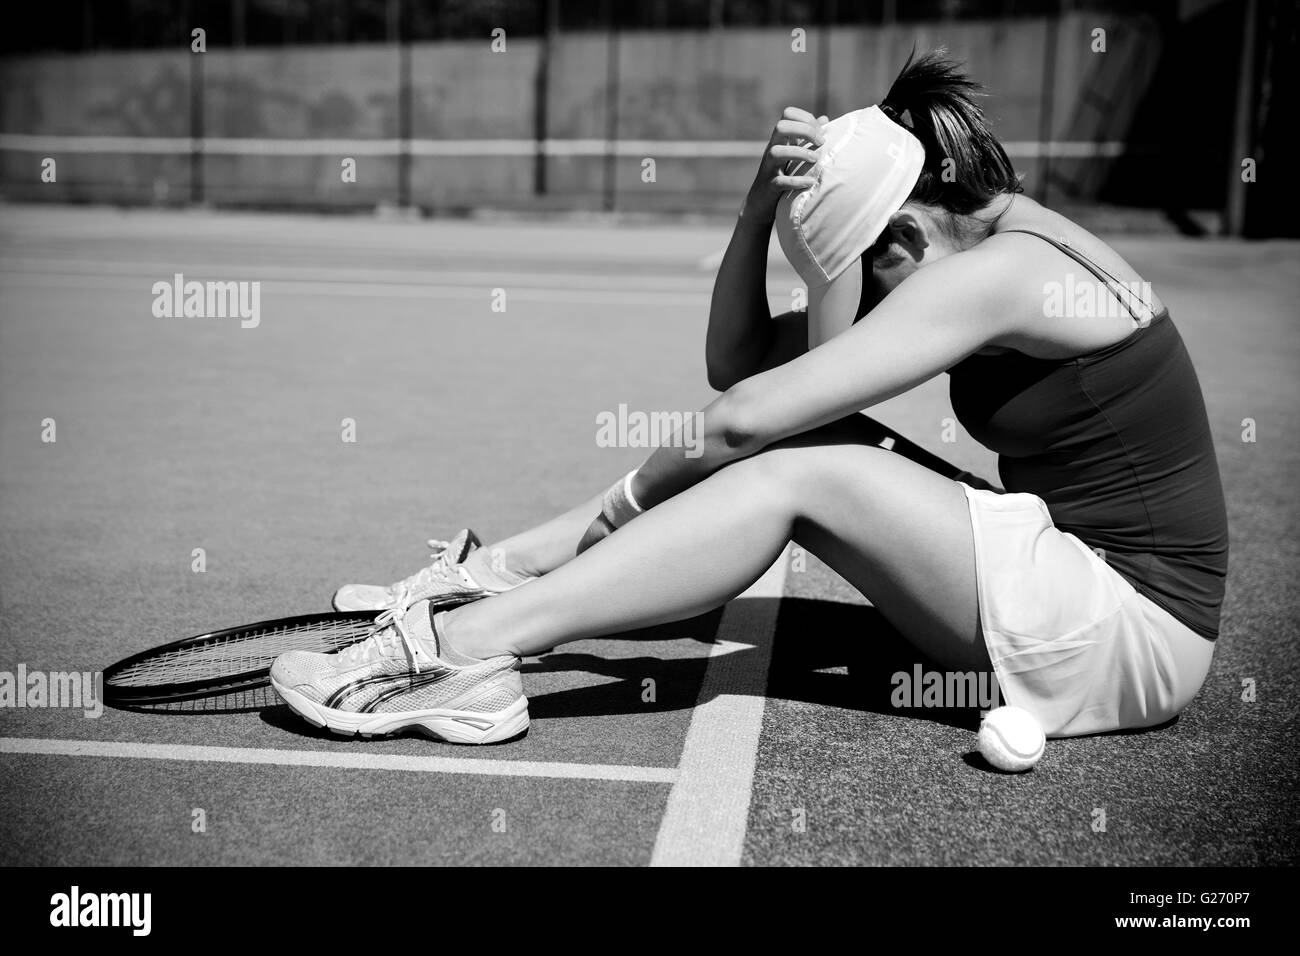 Upset tennis player sitting on court Stock Photo